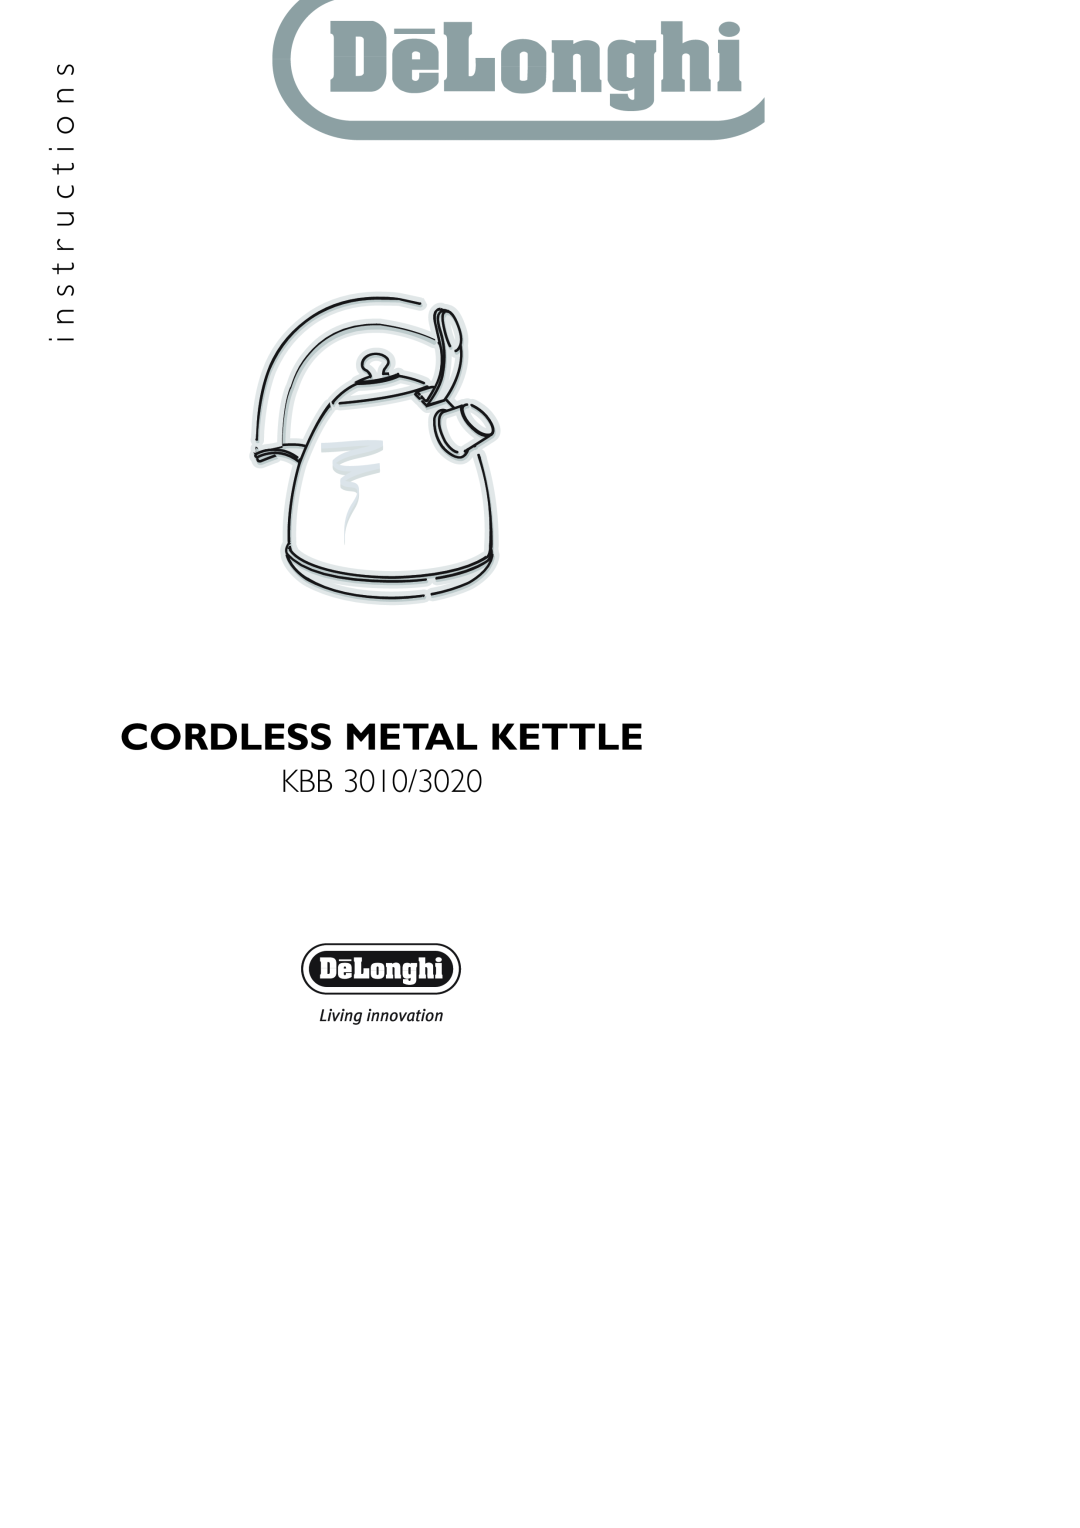 DeLonghi KBB 3020 manual Cordless Metal Kettle, i n s t r u c t i o n s, KBB 3010/3020 